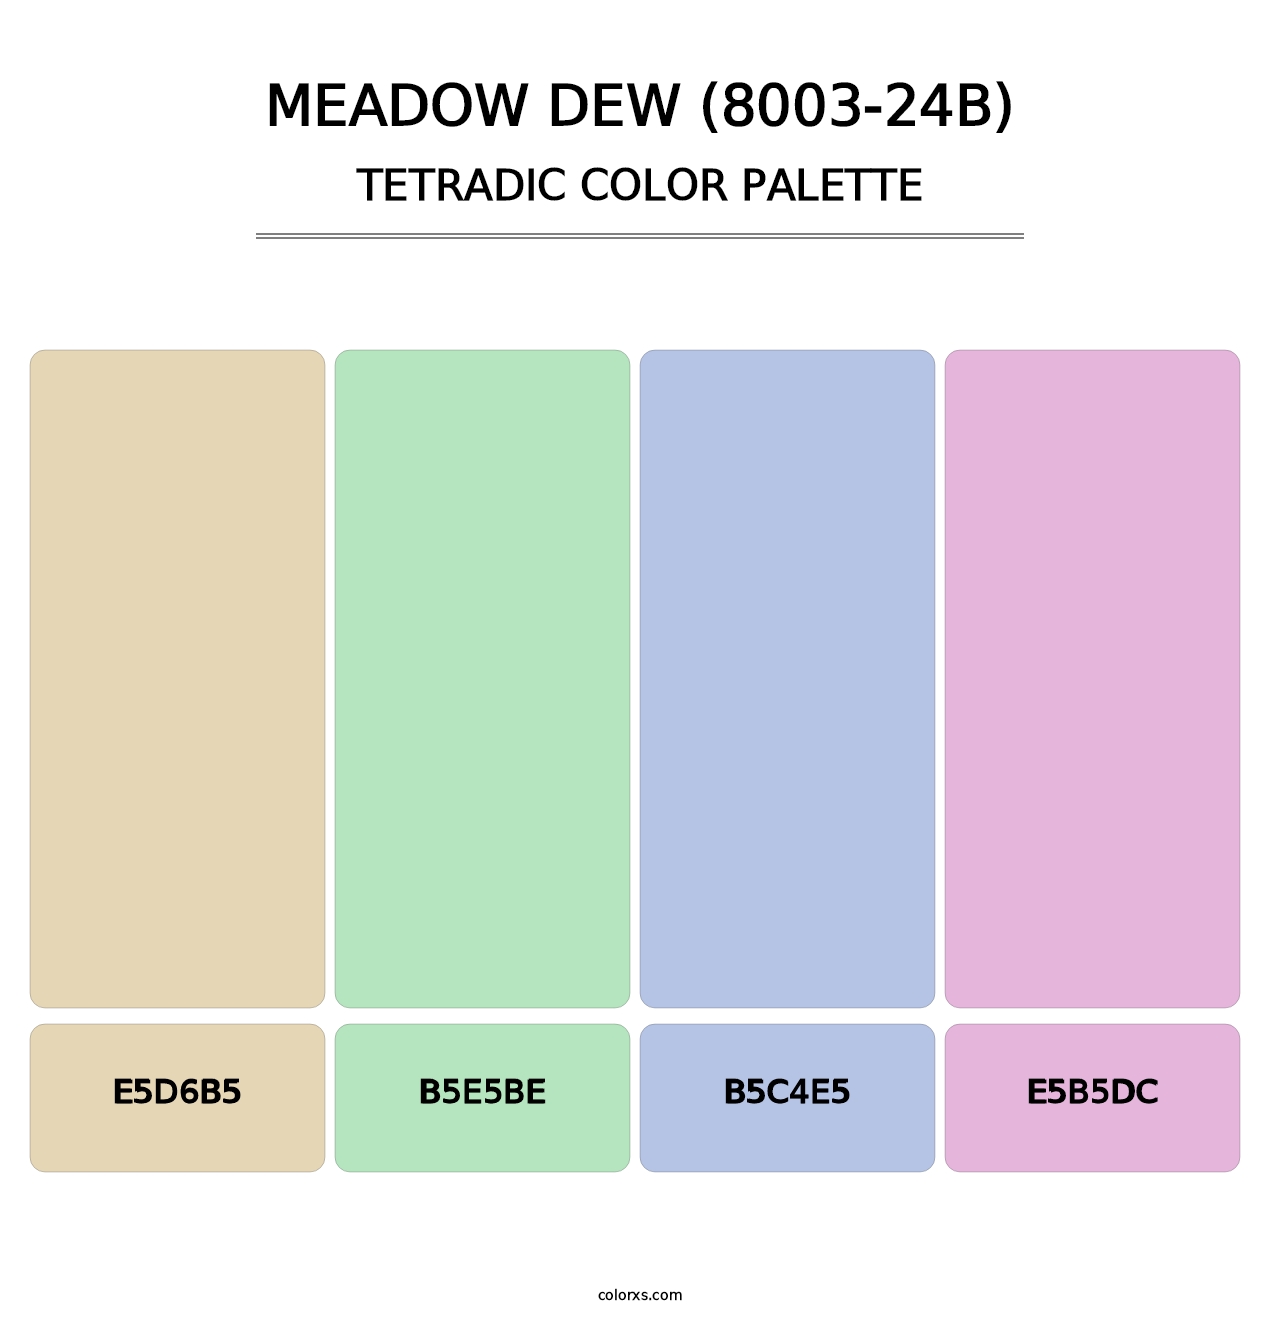 Meadow Dew (8003-24B) - Tetradic Color Palette